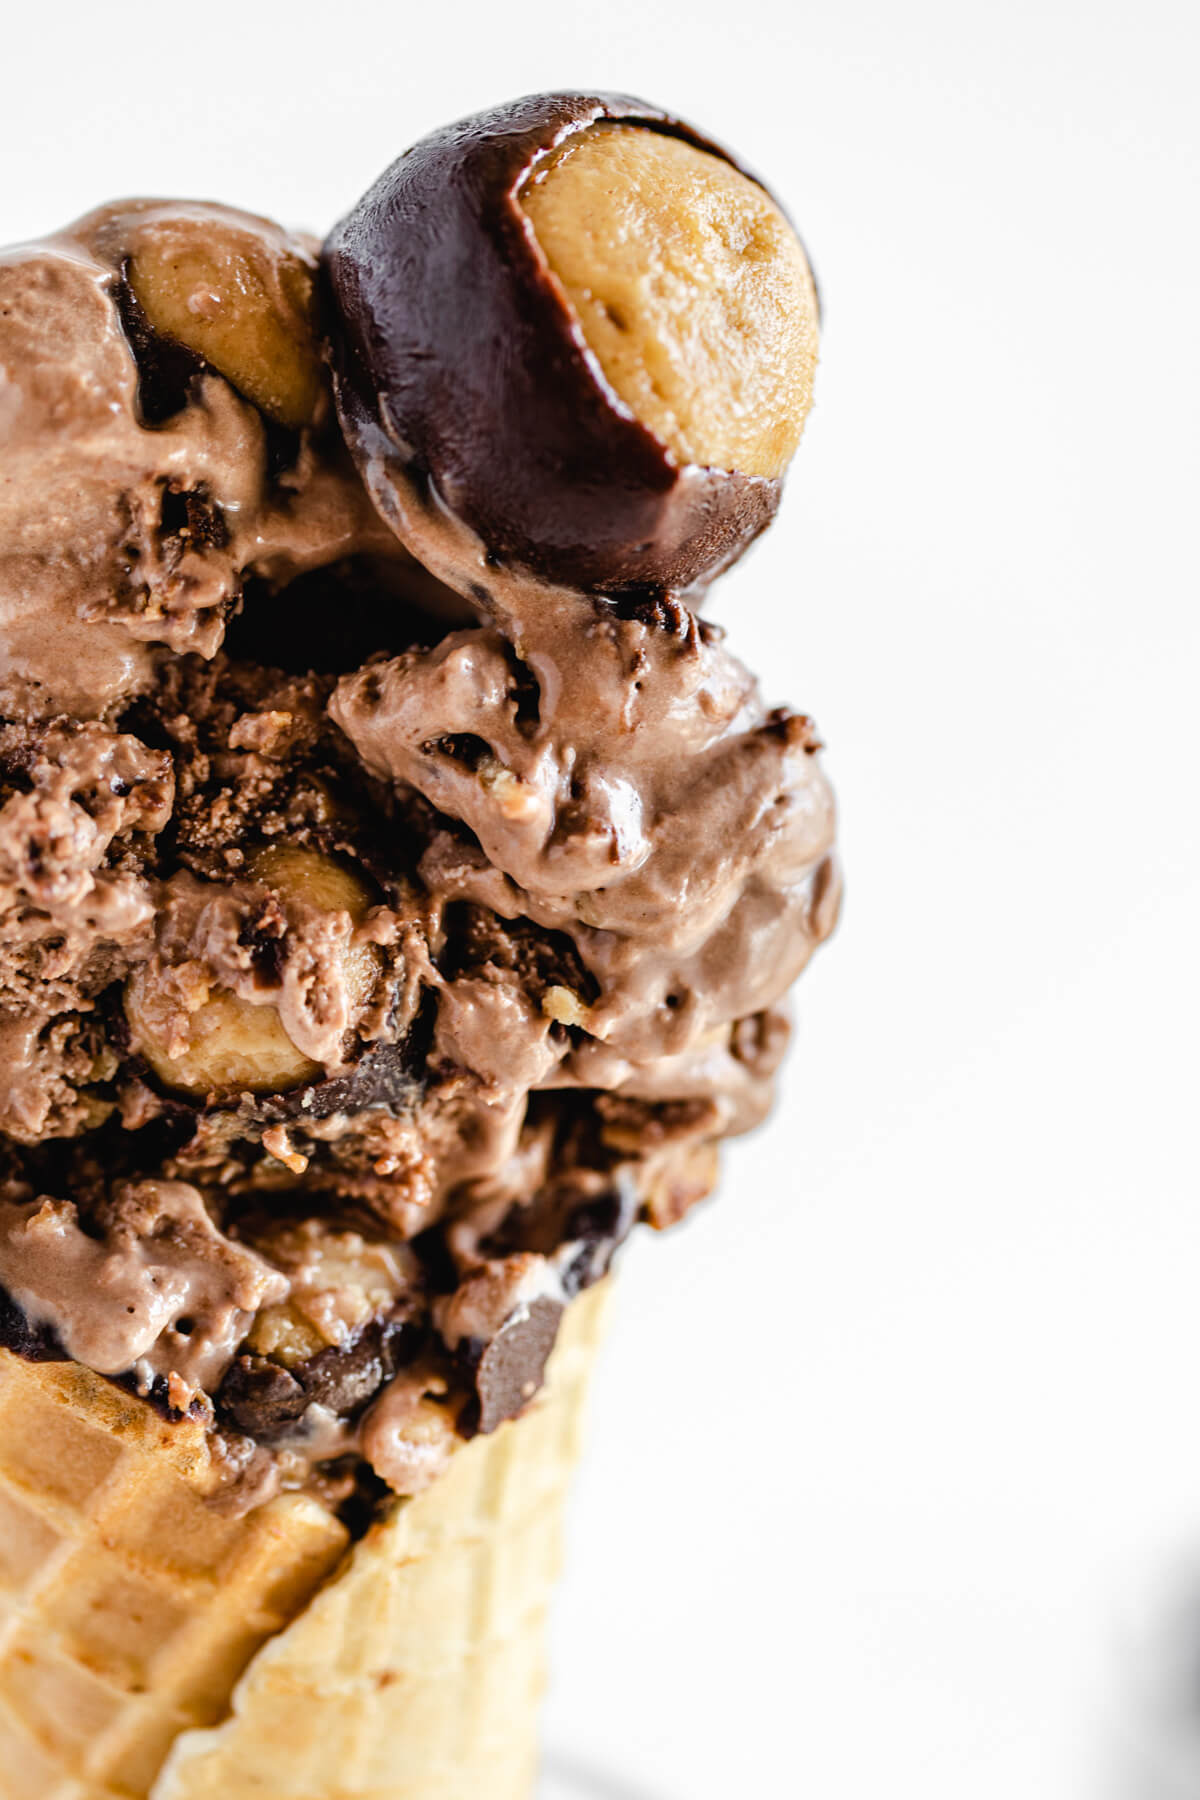 close up of half of an ice cream cone with buckeye truffle on top